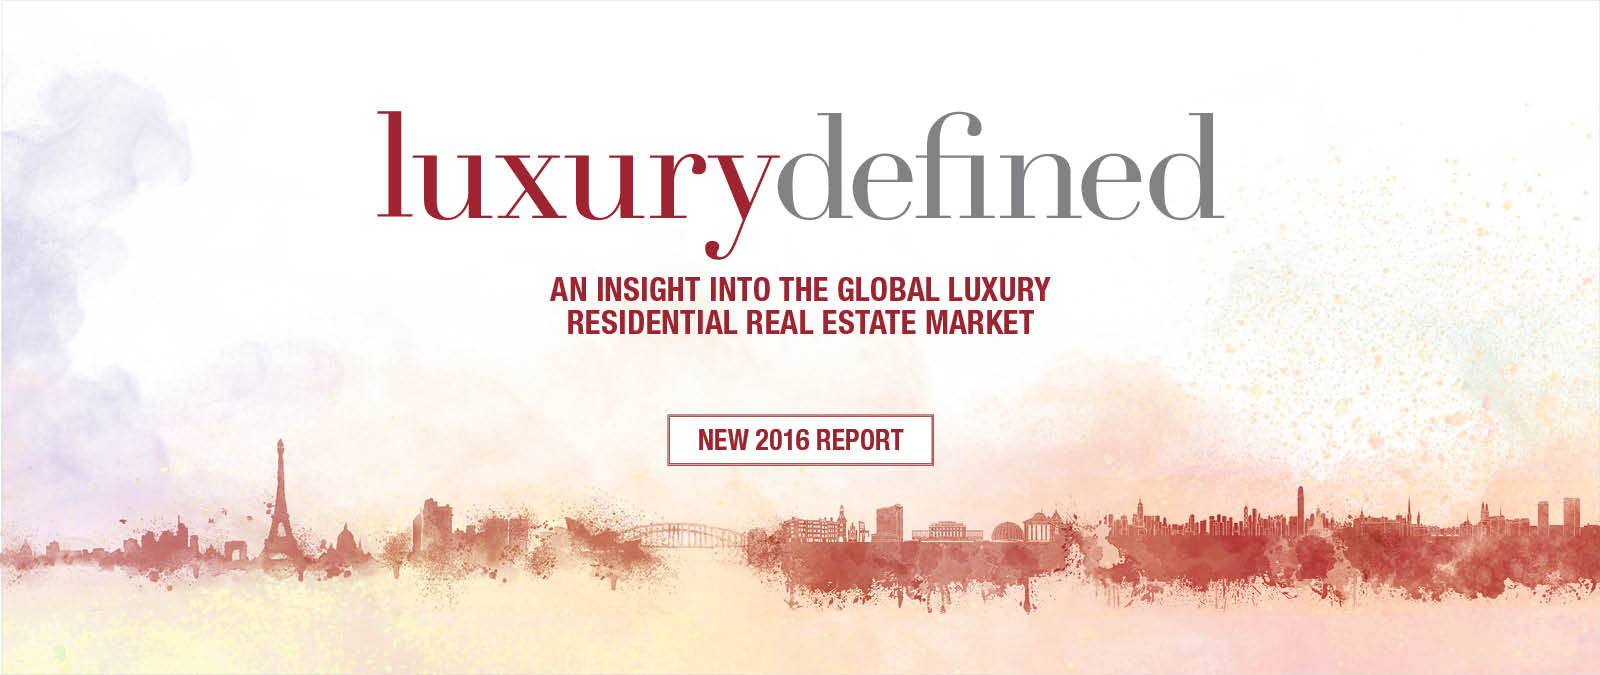 Luxury Real Estate Market Report